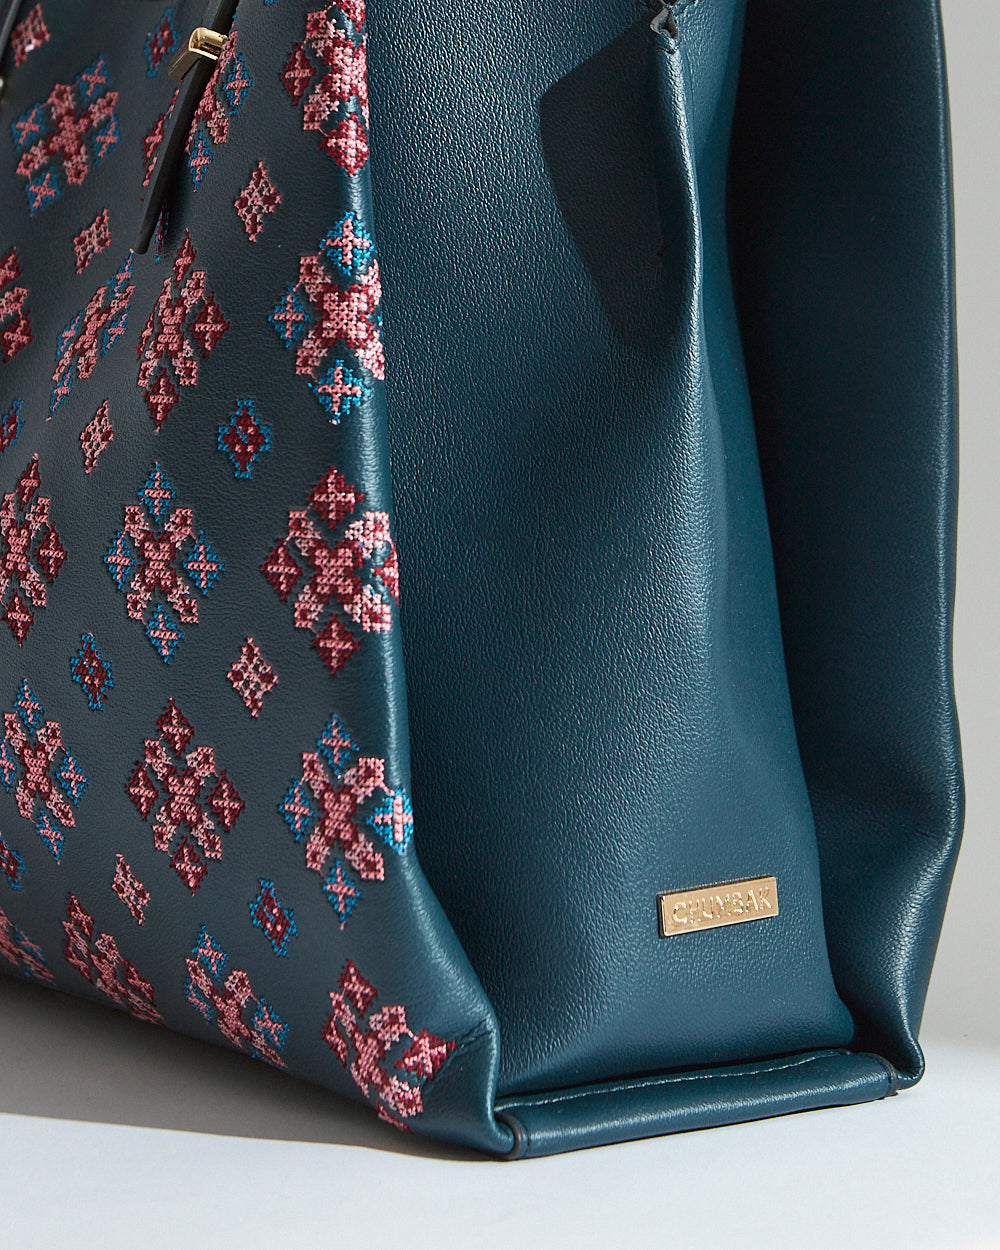 Vibrant Horizon Fashion Tote Bag – Teal Green